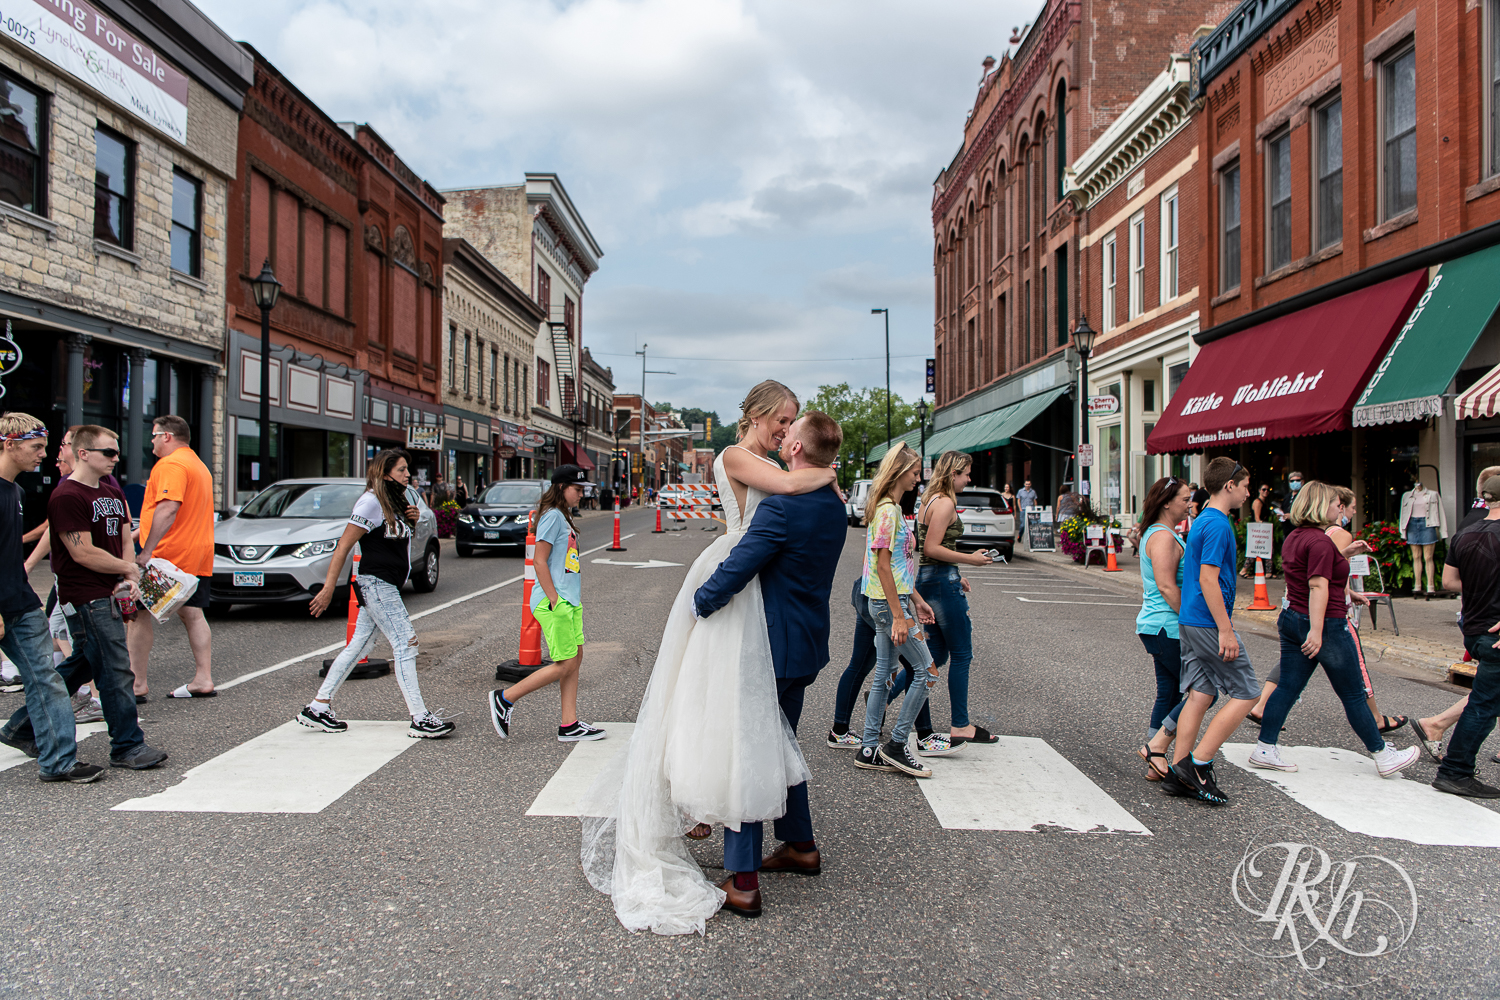 Bride and groom kiss in city street in Stillwater, Minnesota.